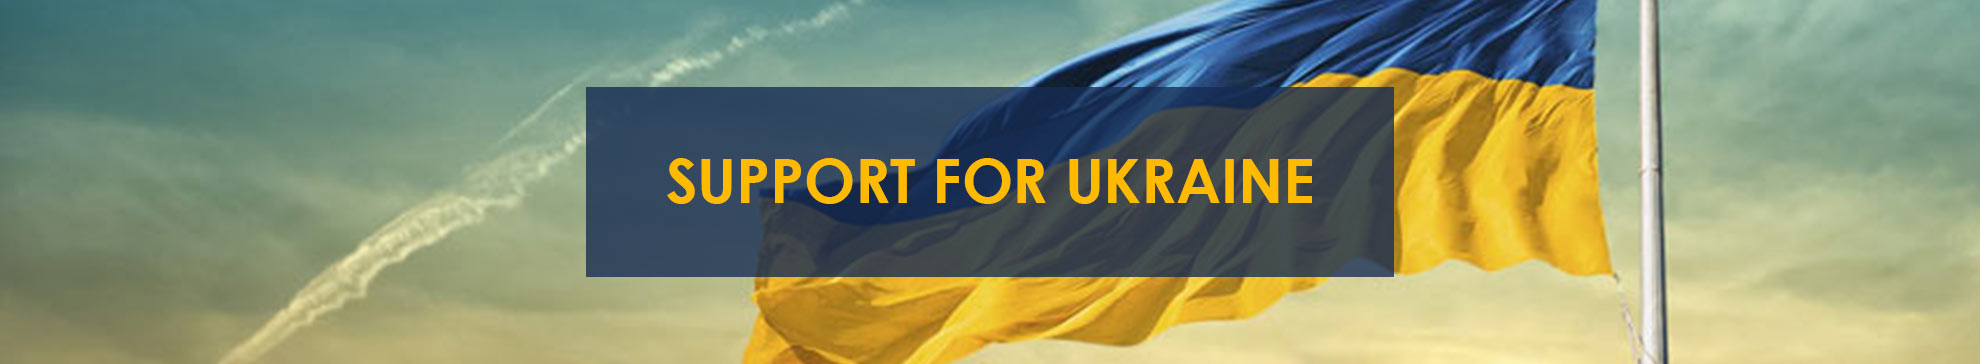 support for ukraine